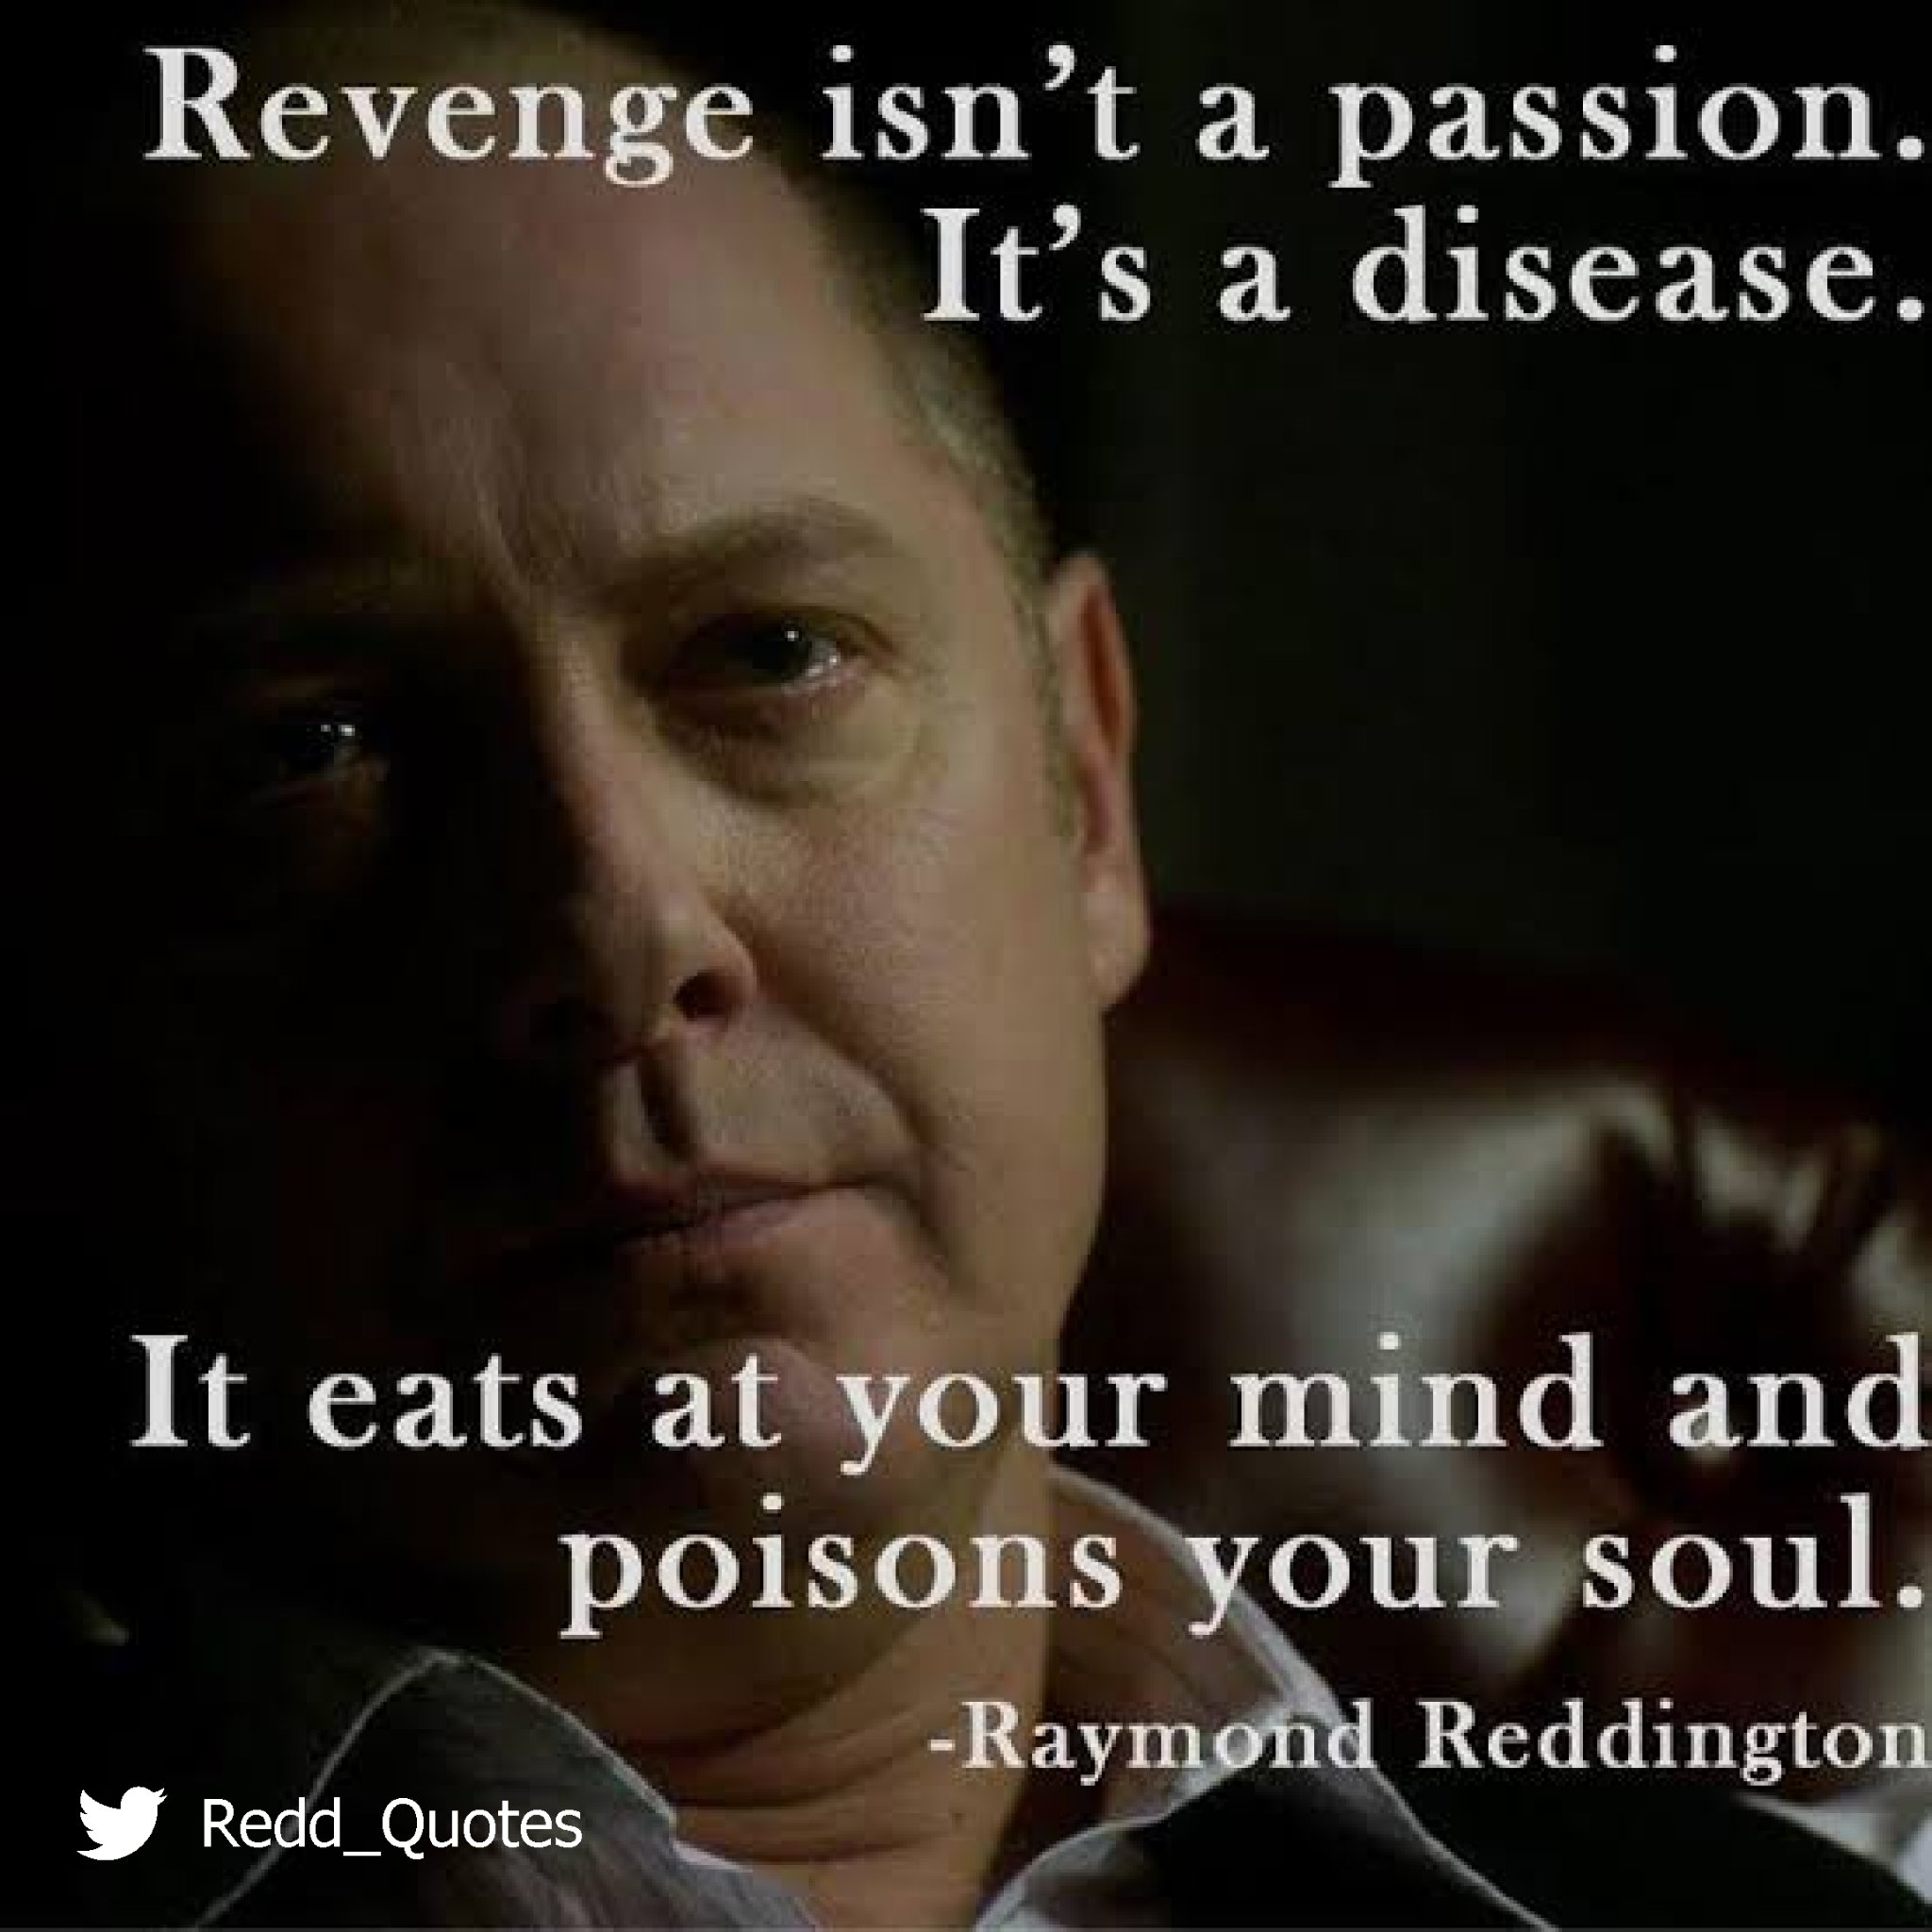 Raymond Reddington Quotes on Twitter: 